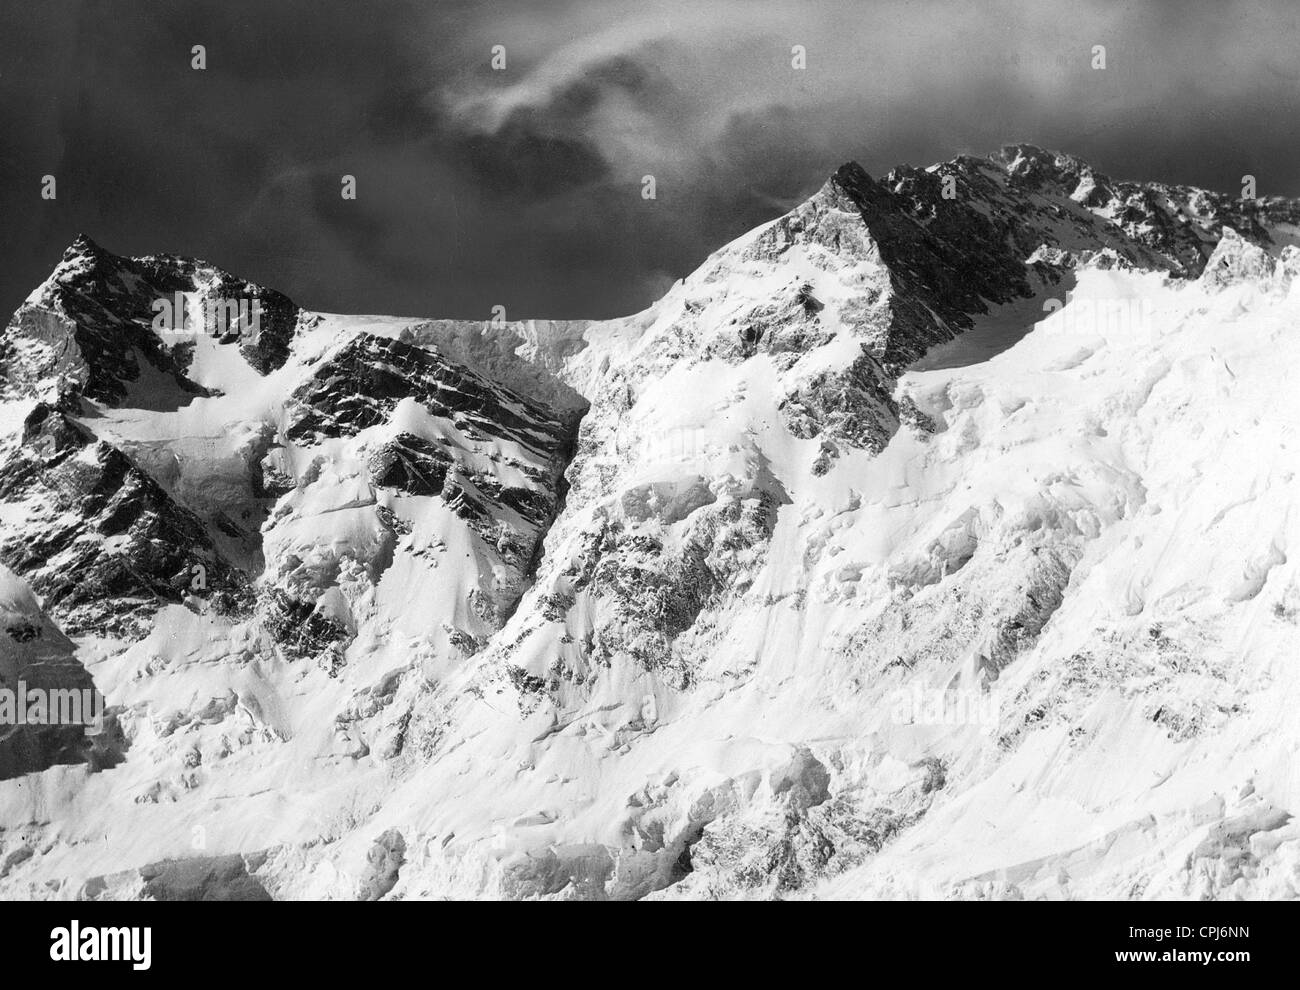 Nanga parbat peak Black and White Stock Photos & Images - Alamy